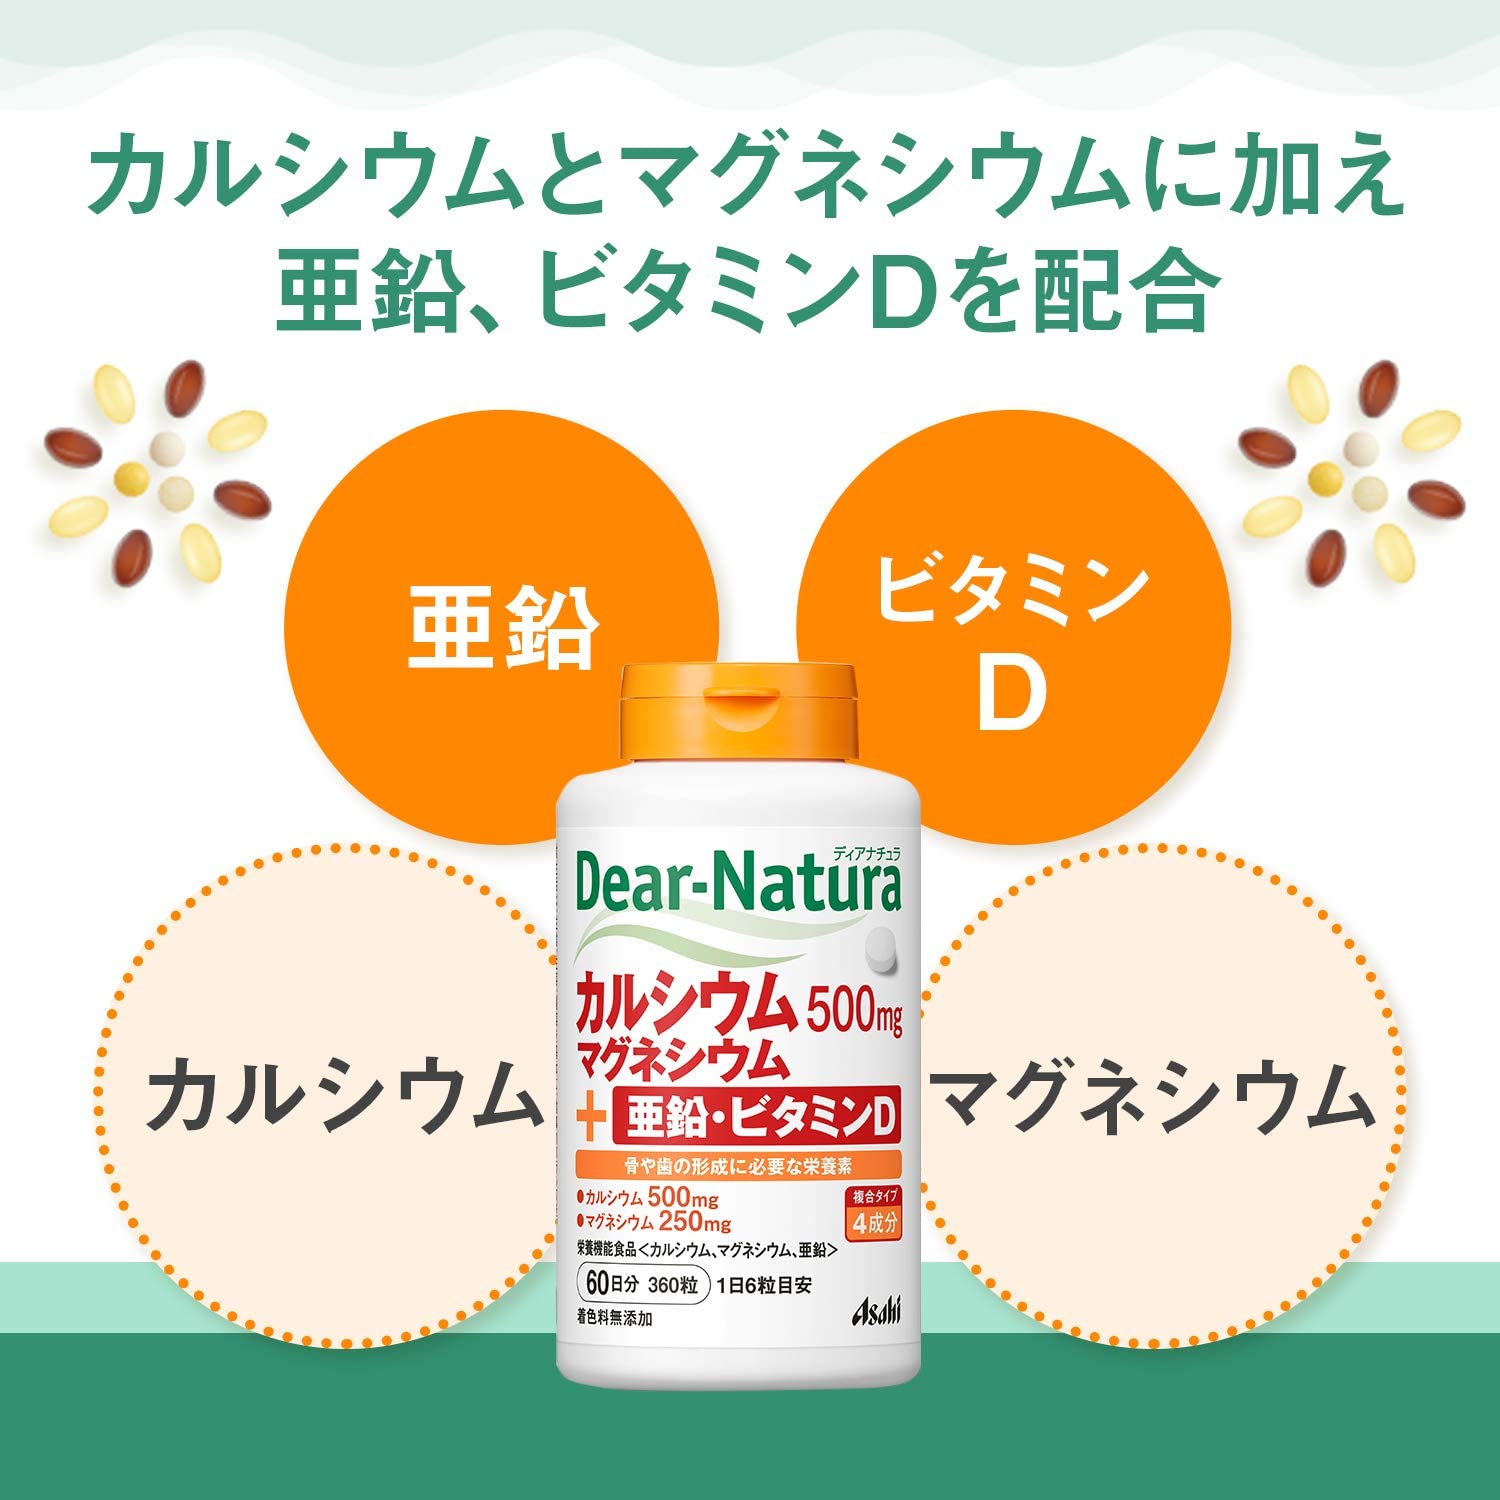 Dear-Natura Calcium/Magnesium/Zinc/Vitamin D 360 grains (60 days)